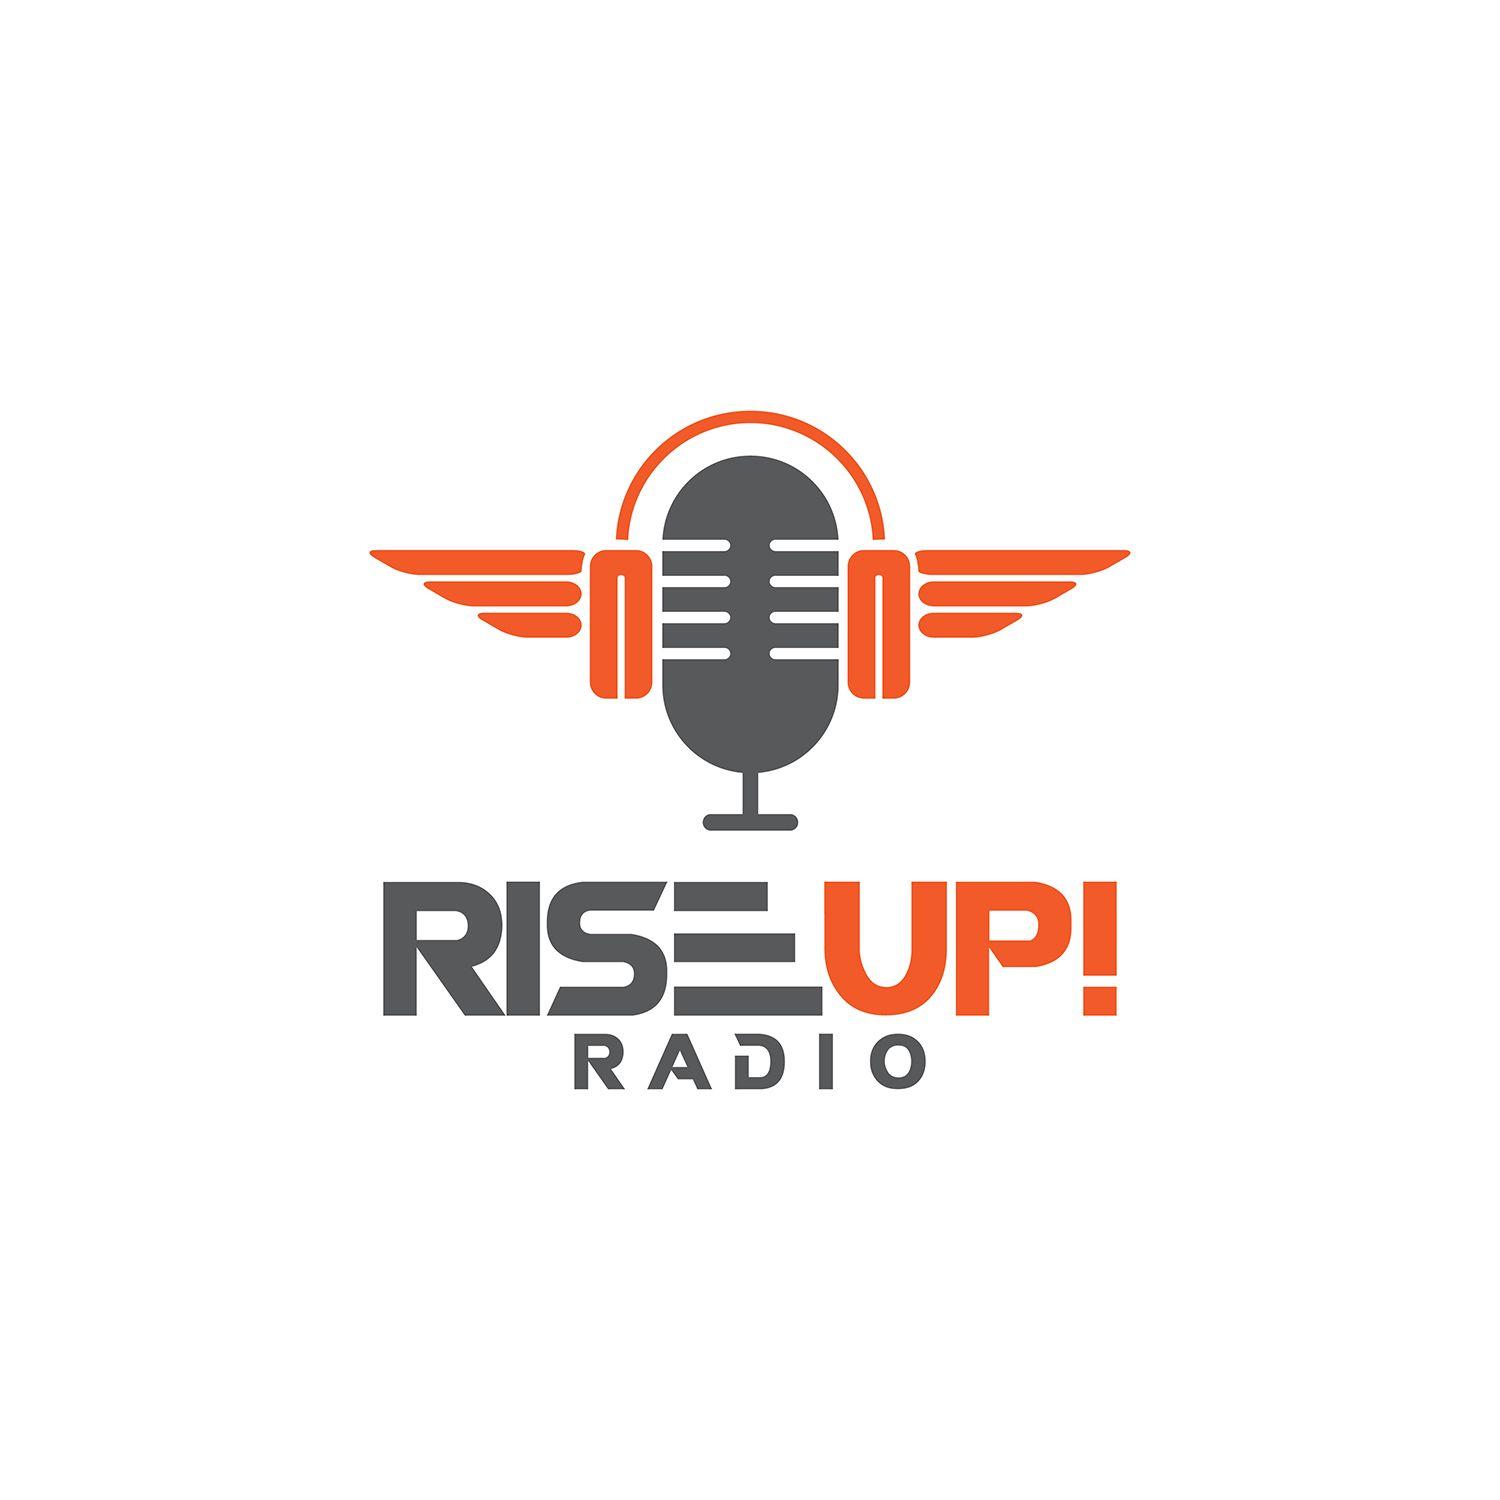 Radio Logo - Elegant, Playful, Radio Logo Design for Rise Up! Radio by DreamMaker ...